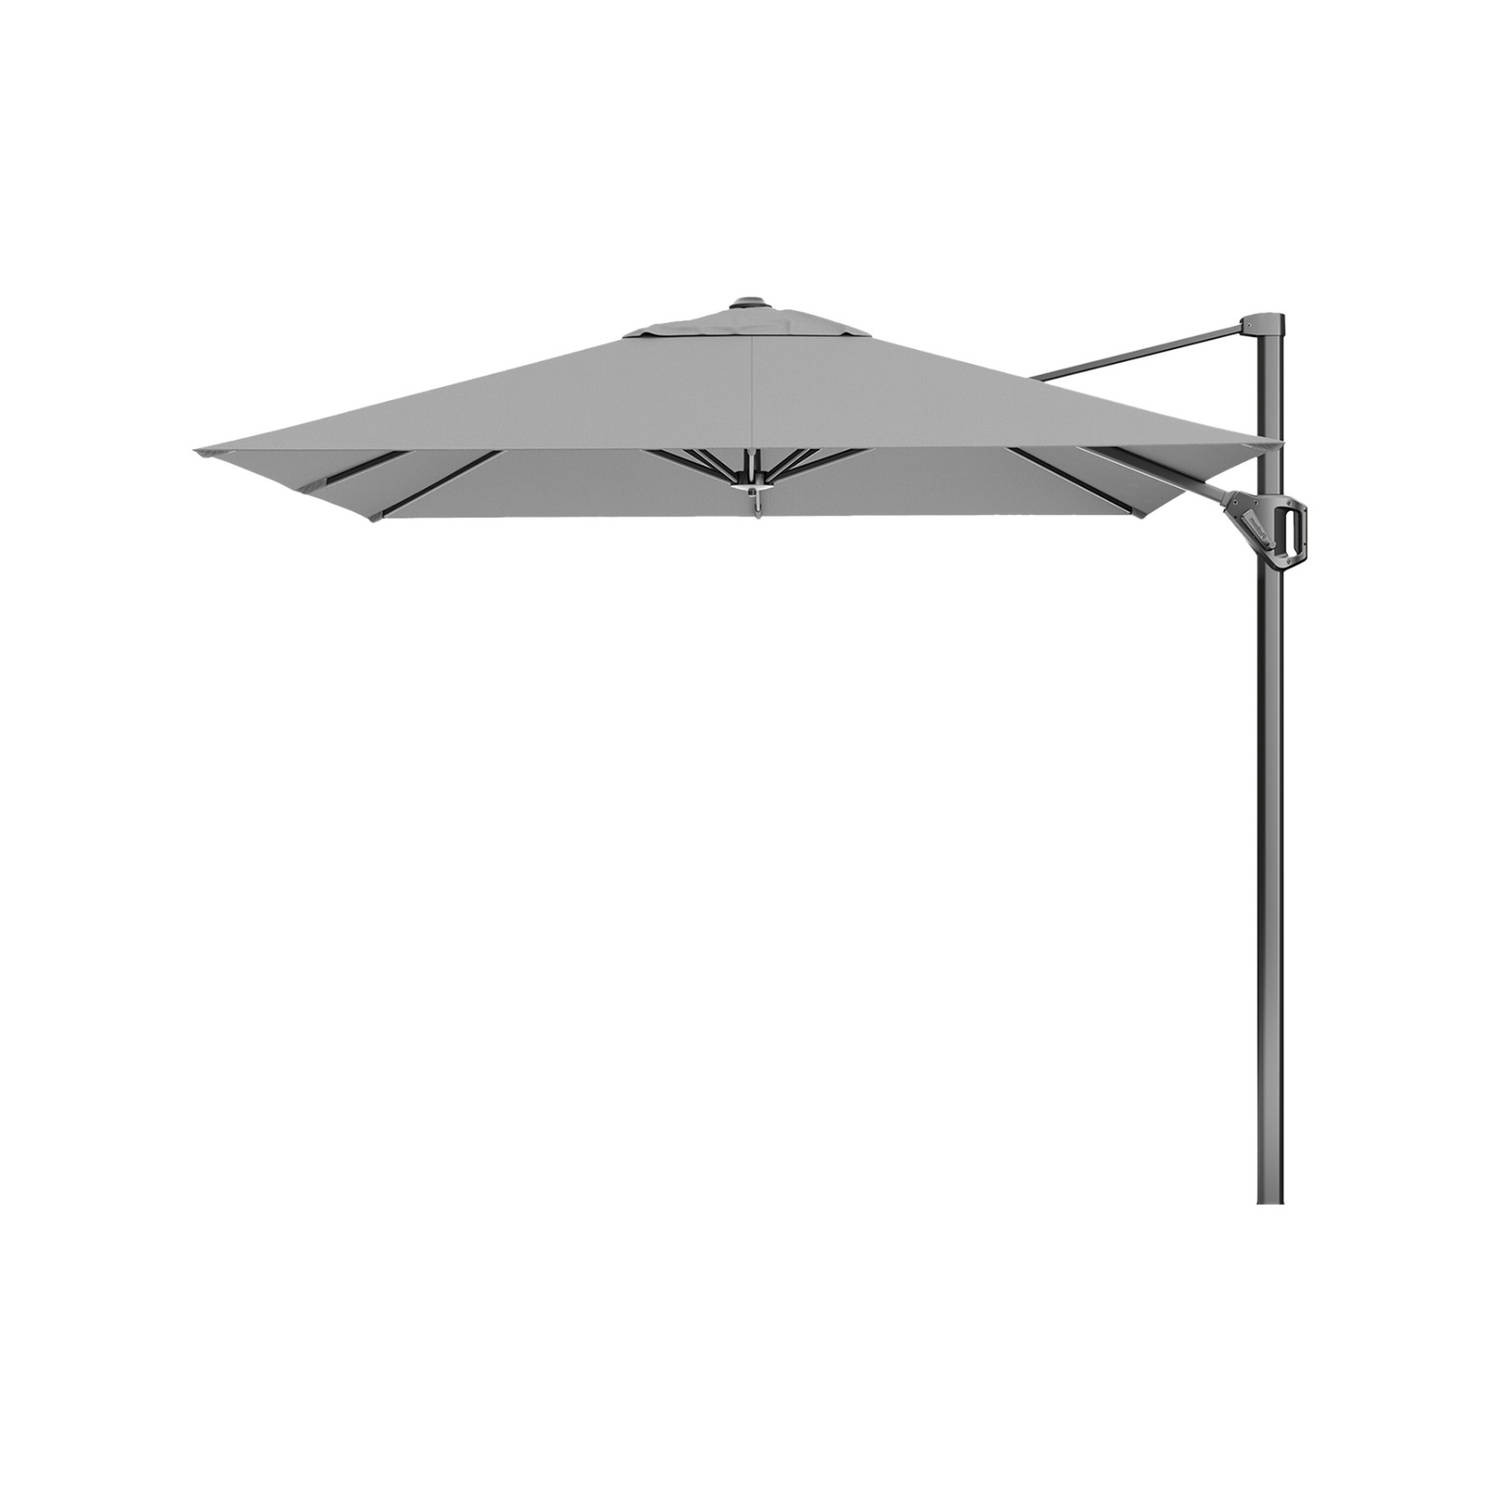 Platinum Voyager Zweefparasol T1 parasol 2,5x2,5 m. - Light Grey